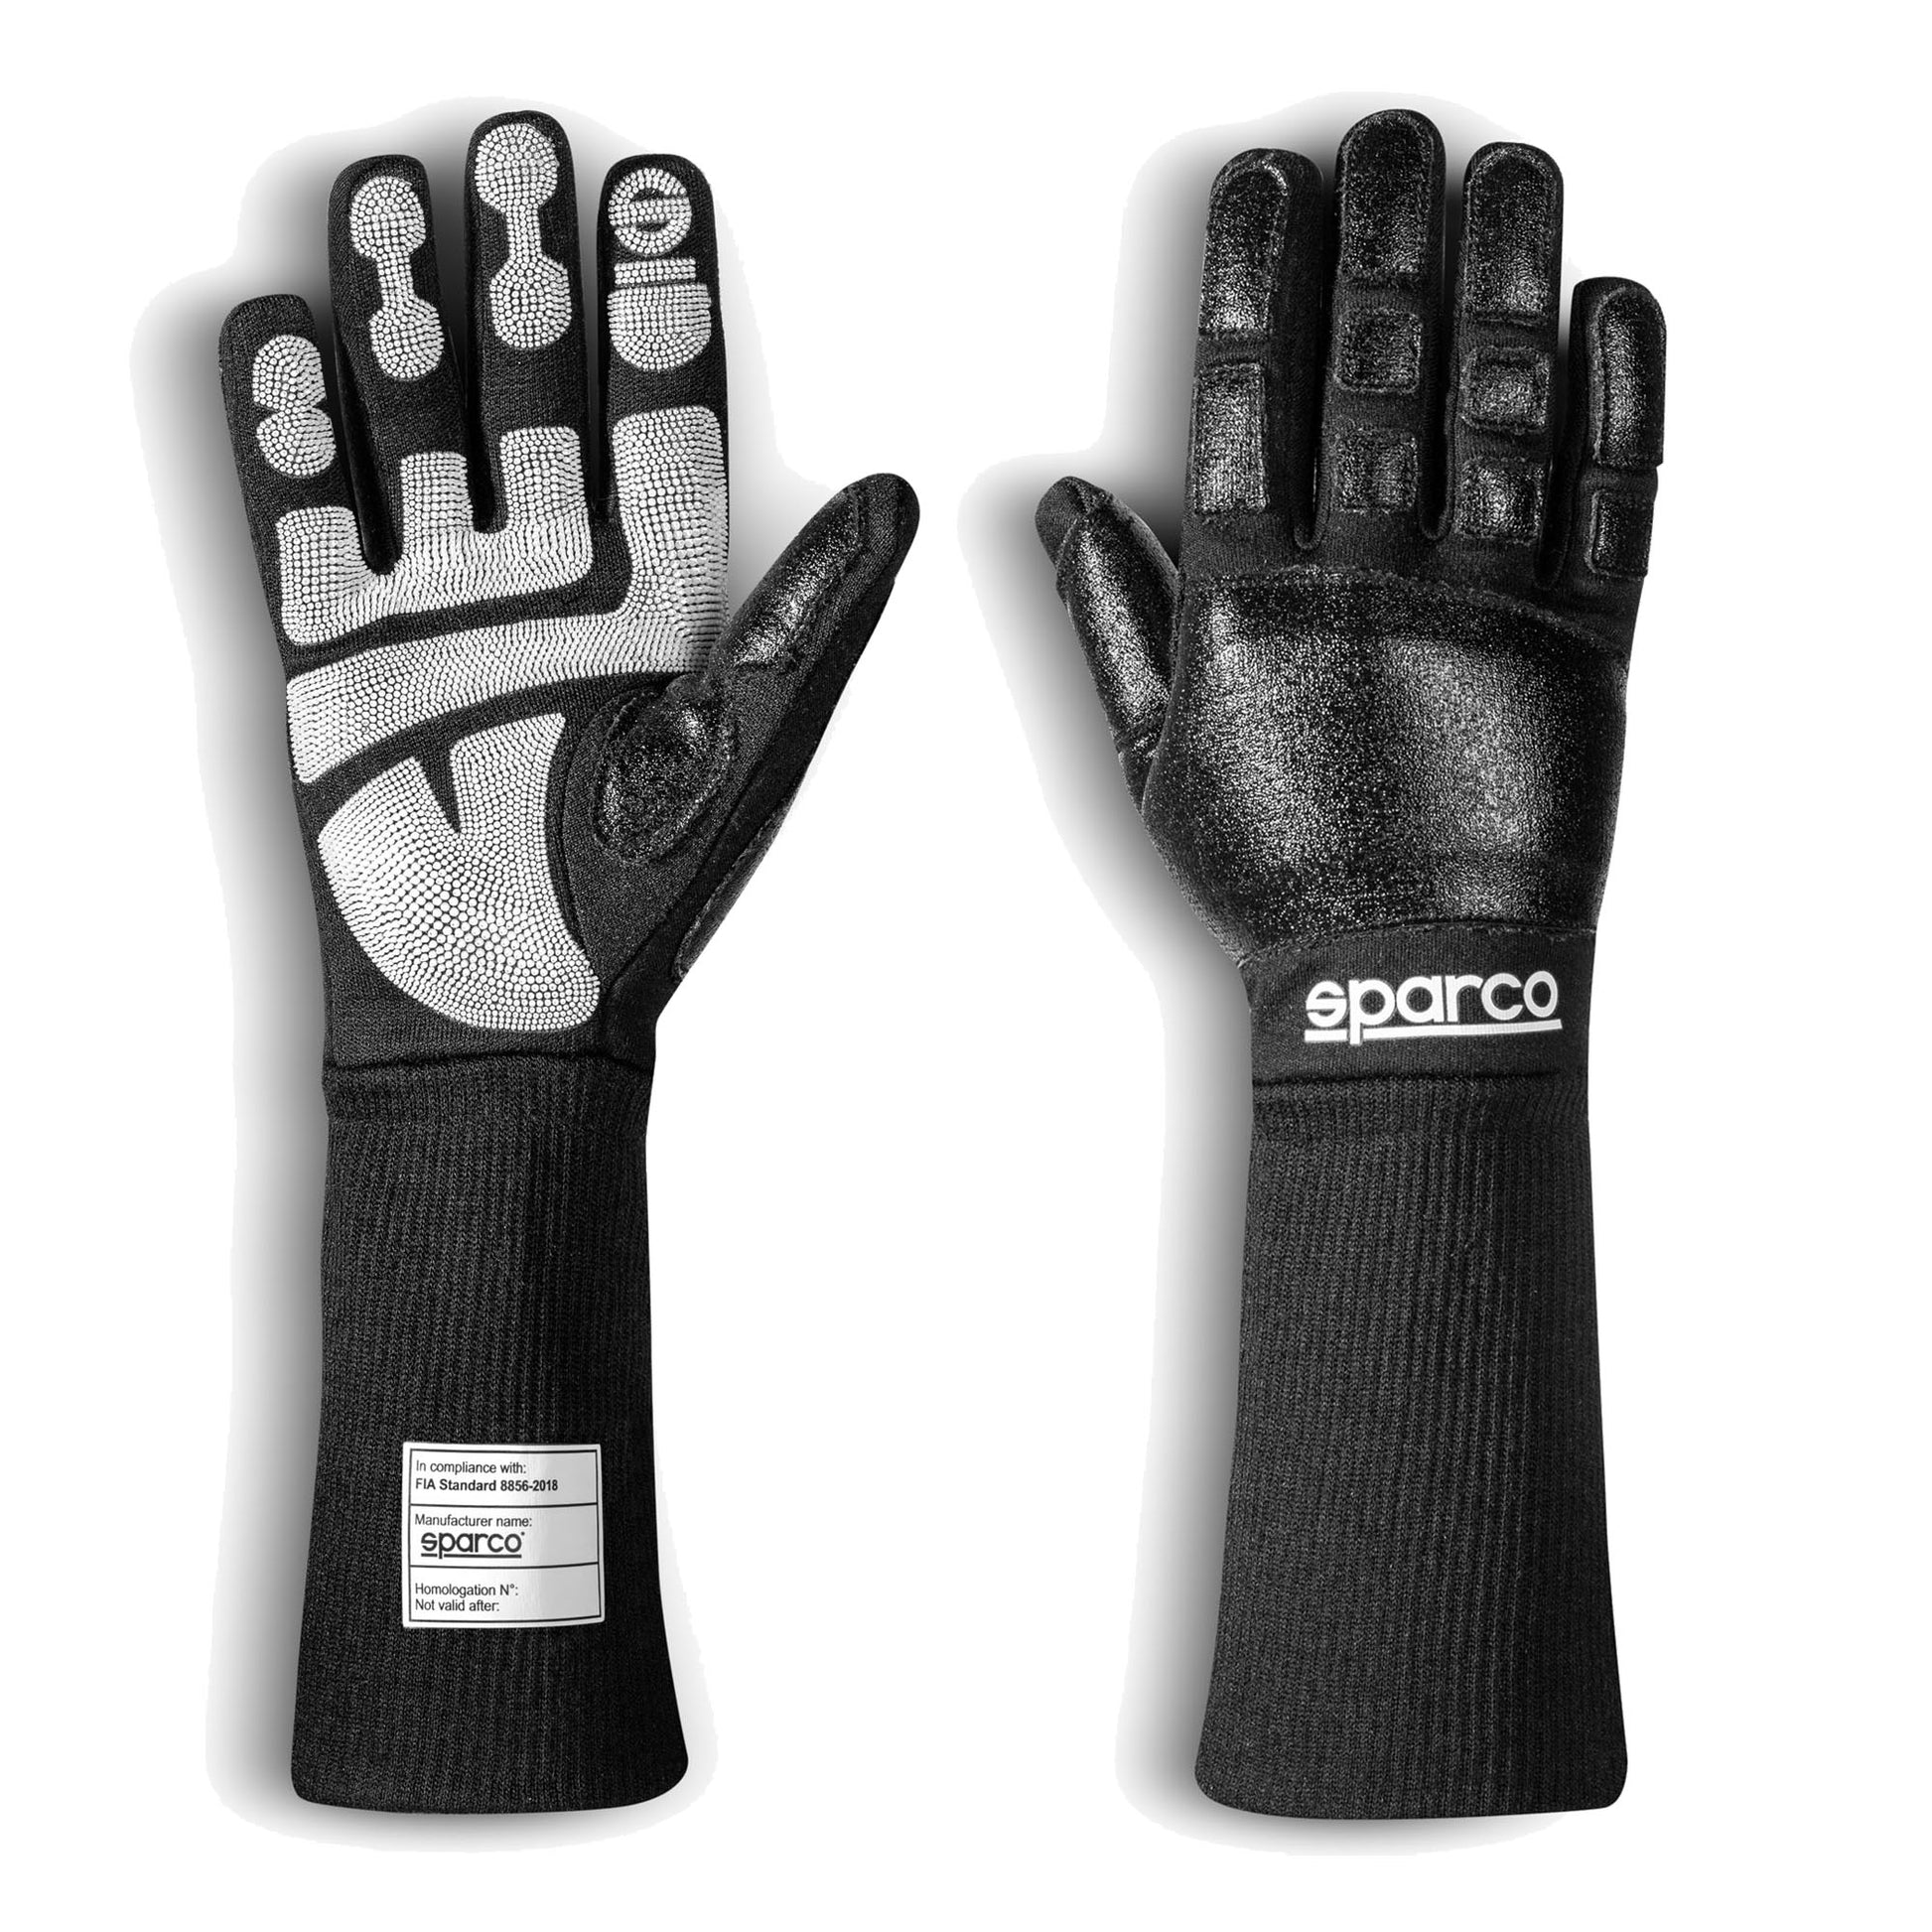 Sparco Meca 3 Mechanics Glove - European Version